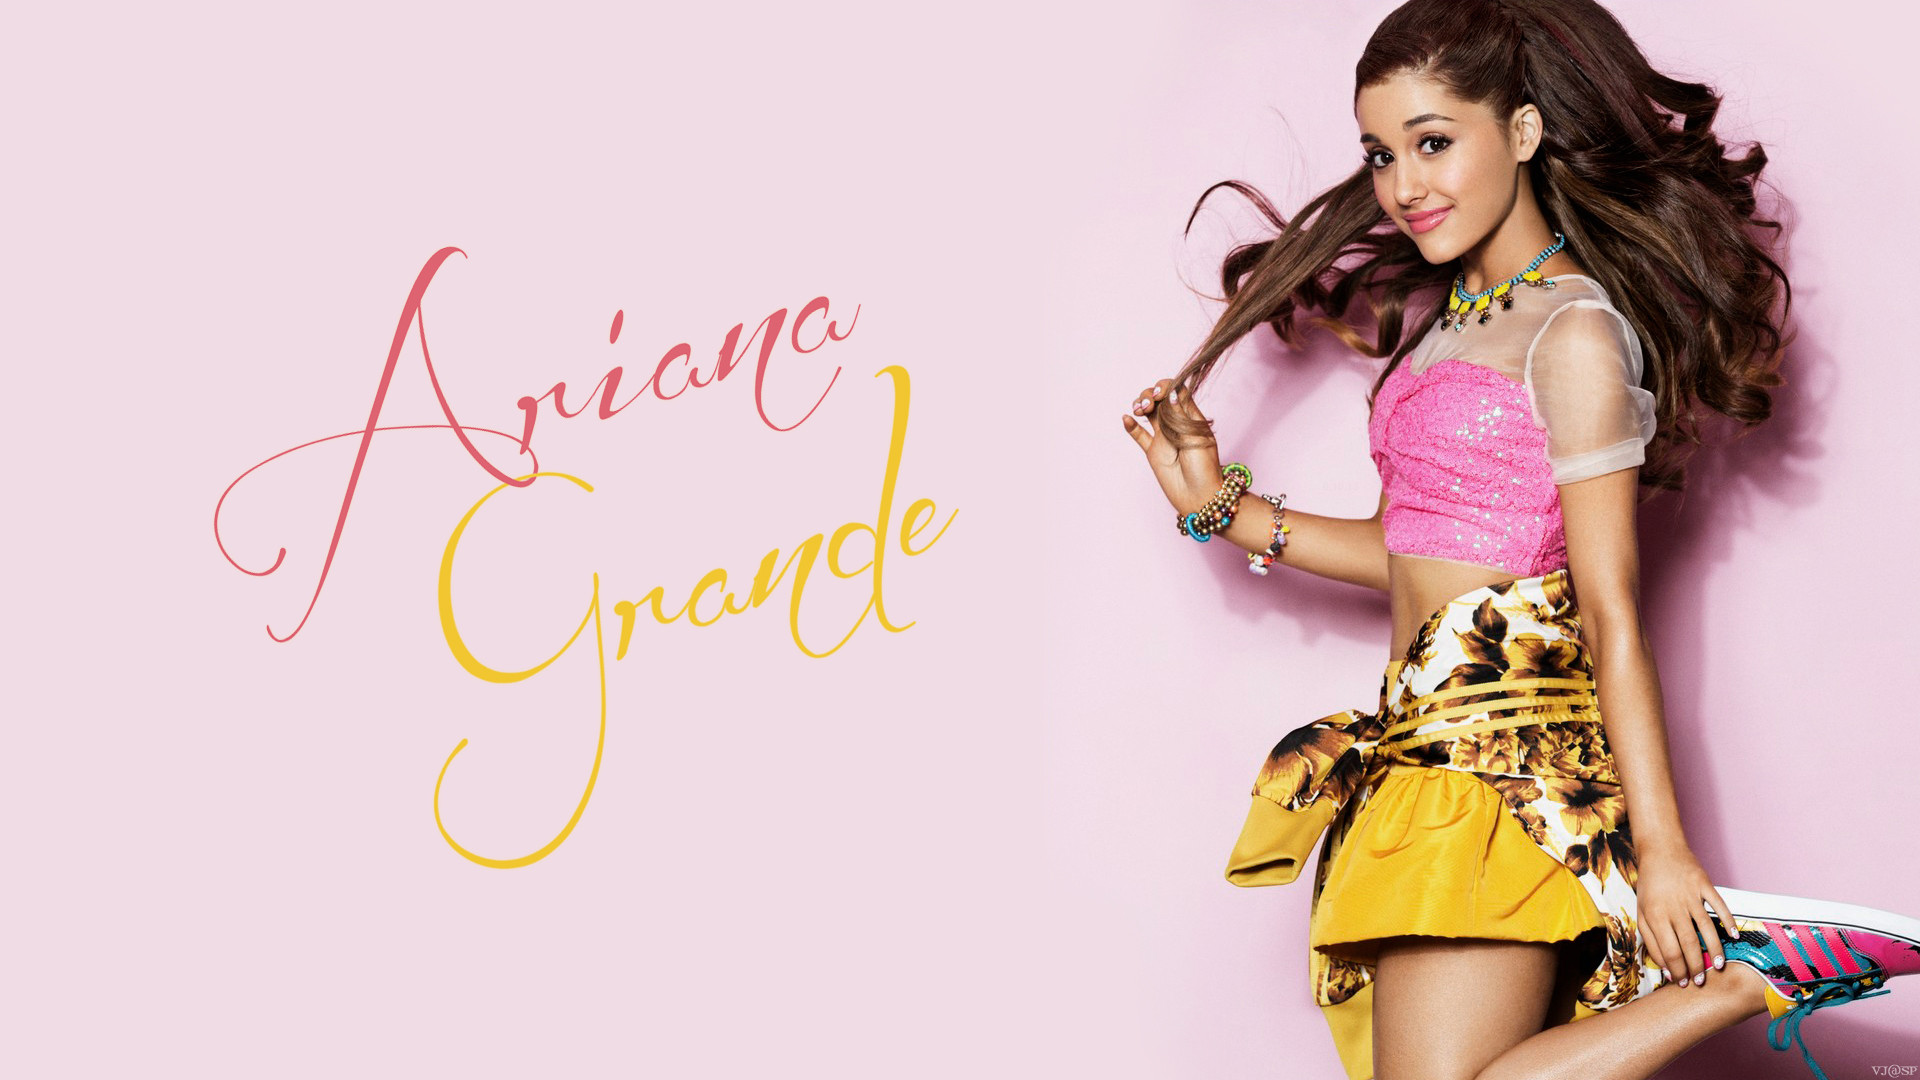 Wallpaper Made By Me - Ariana Grande Wallpaper Hd , HD Wallpaper & Backgrounds